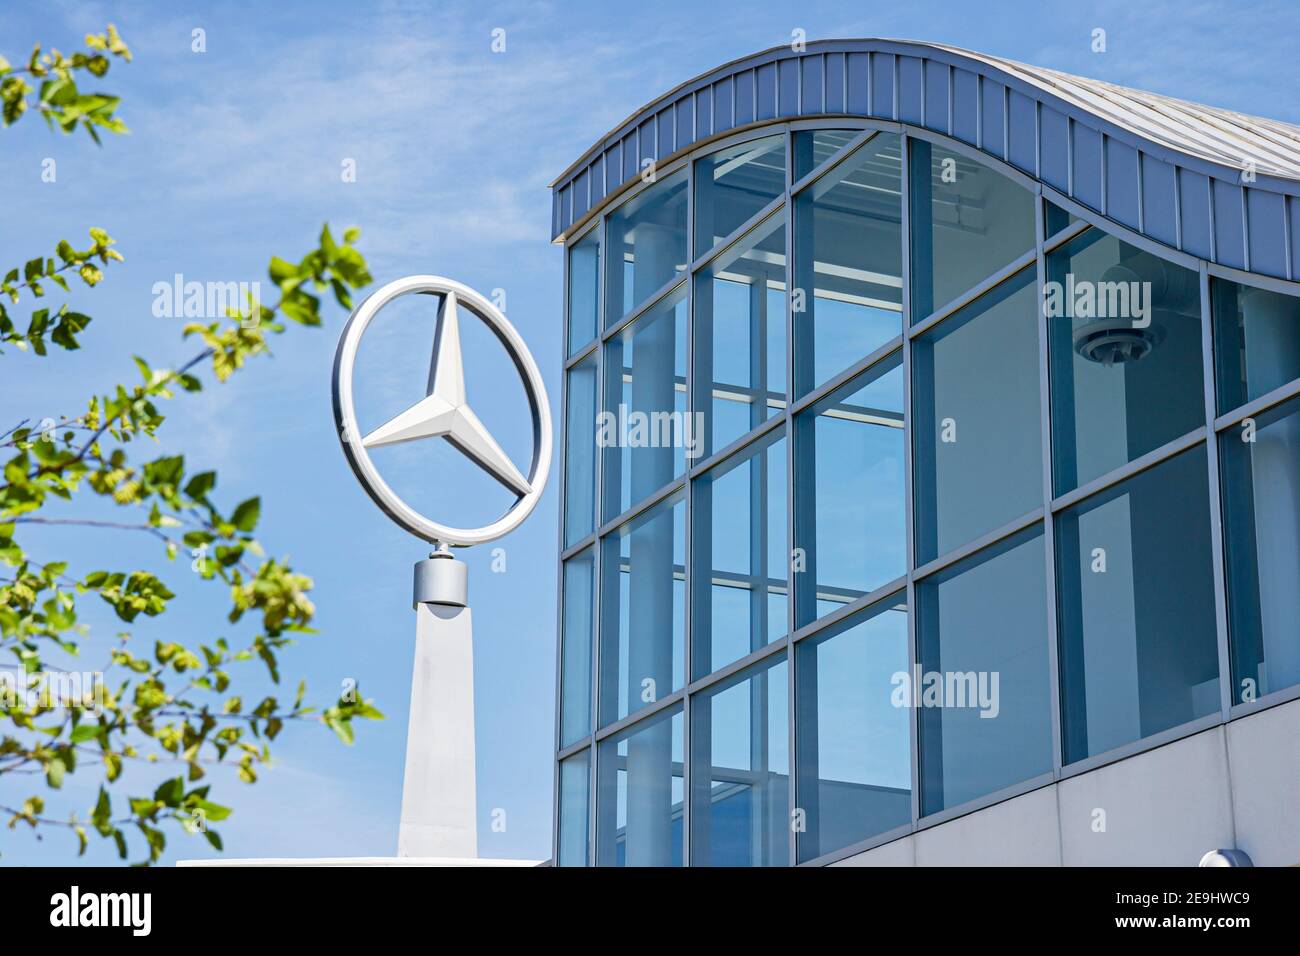 Alabama Vance Mercedes Benz SUV manufacturing plant production,Visitors Center centre outside exterior logo,German luxury car automobile Stock Photo